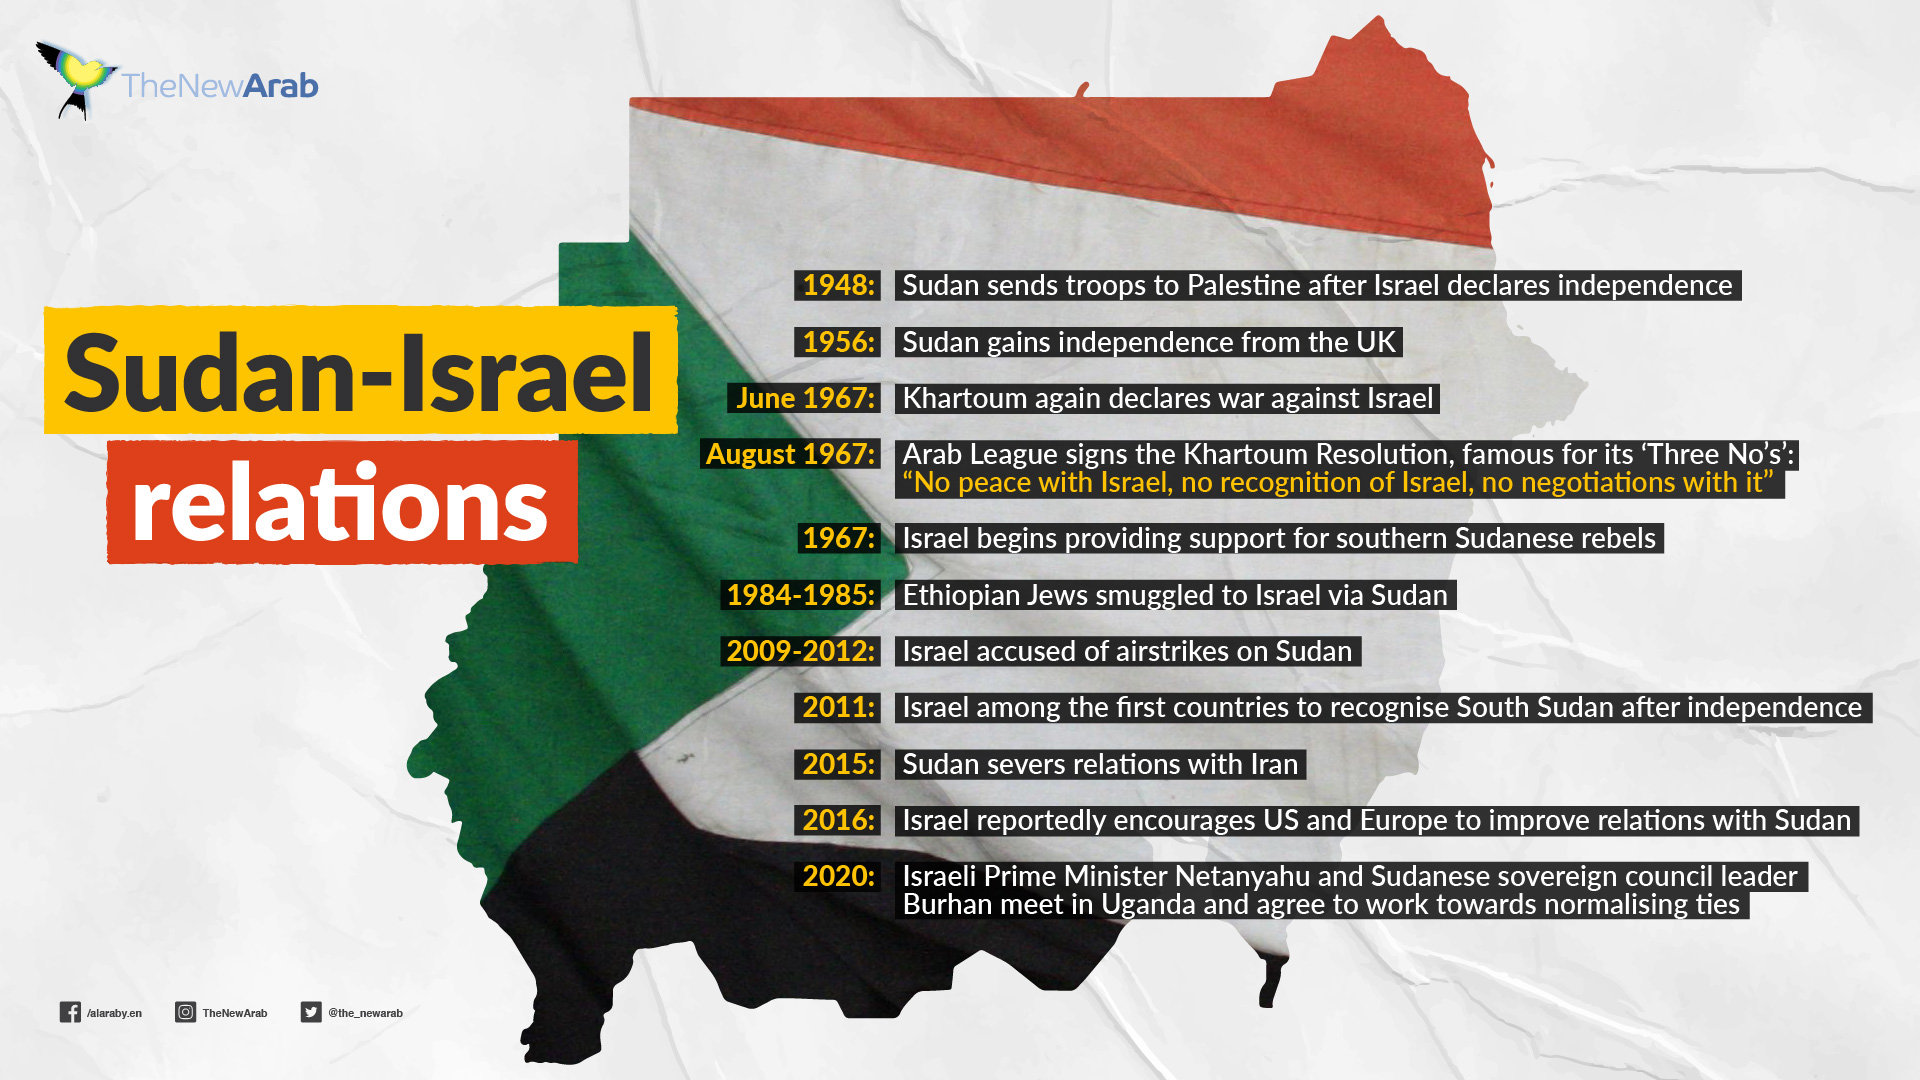 Sudan-Israel relations